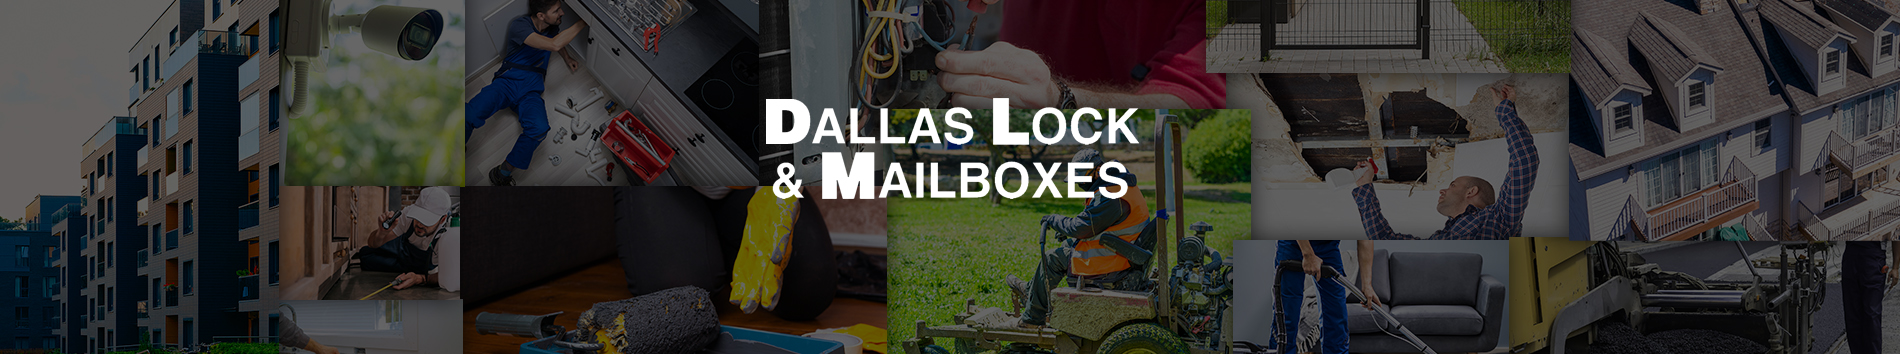 Dallas Lock & Mailboxes